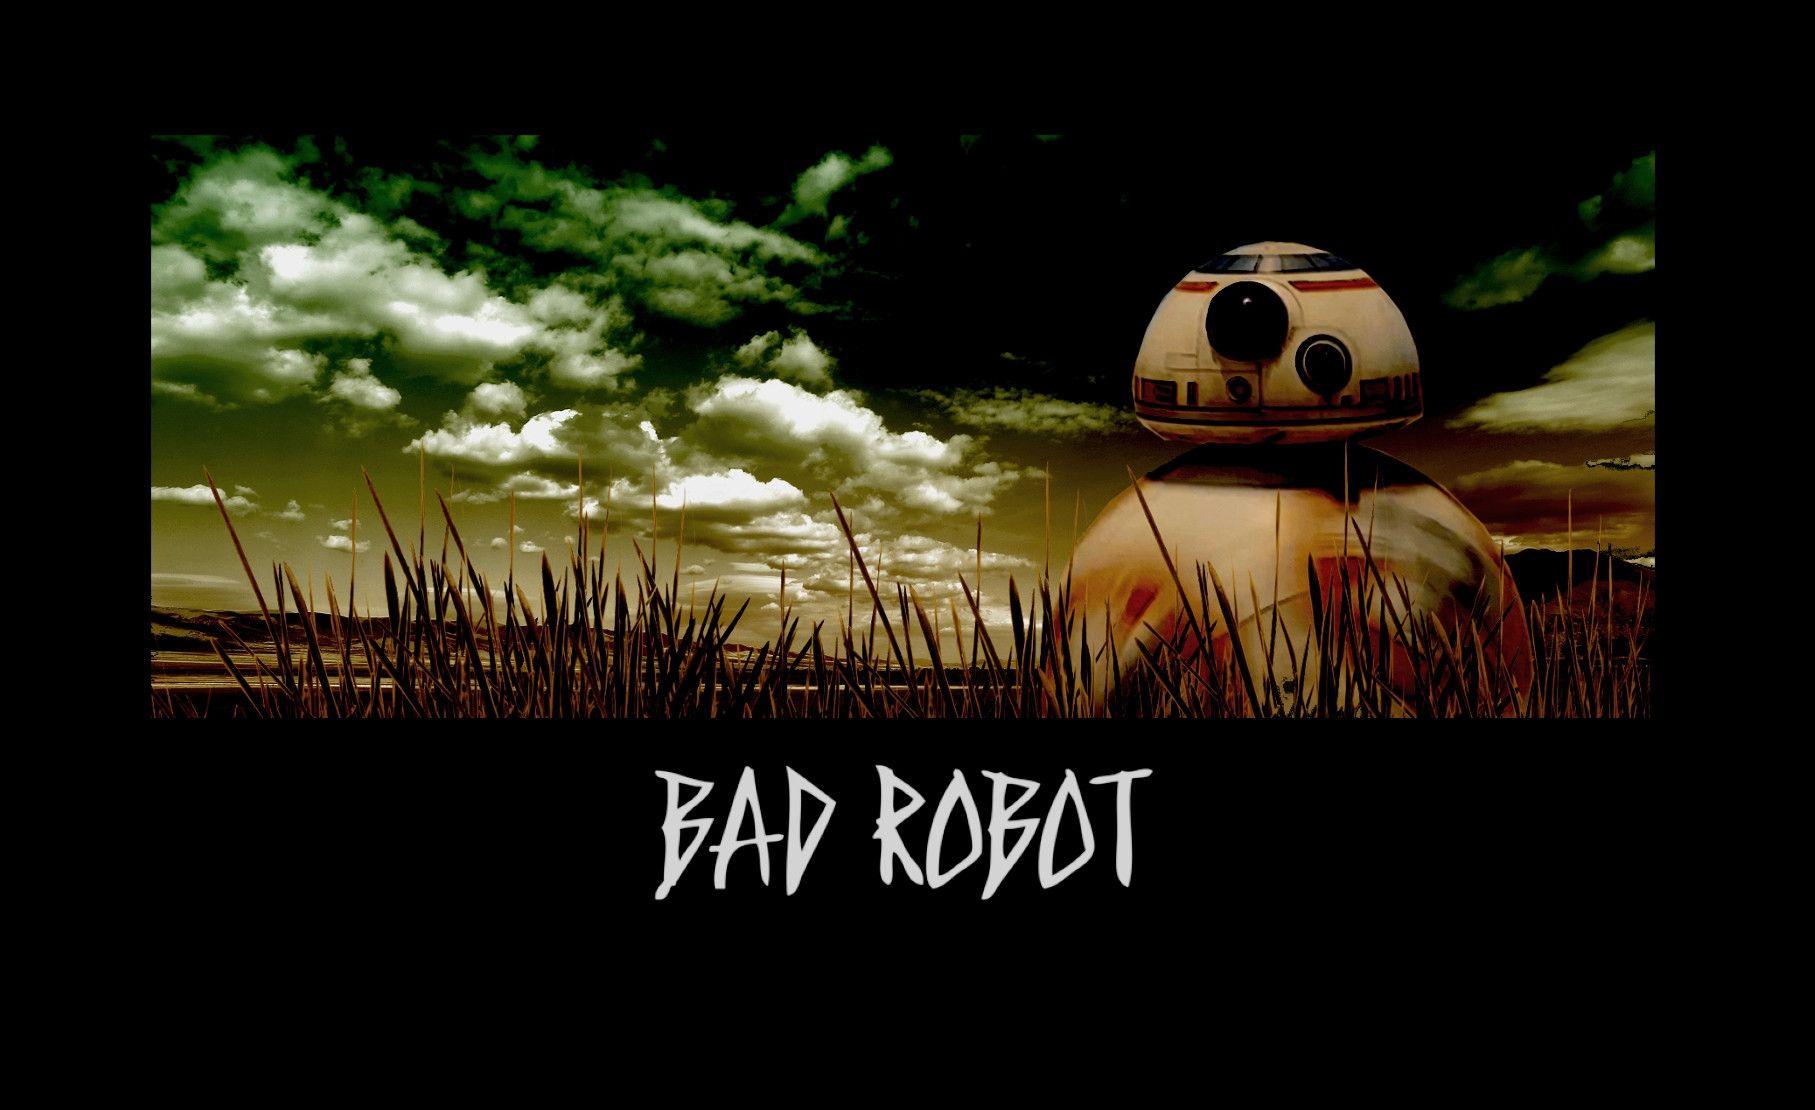 Bad Robot Logo - I updated Bad Robot's logo for them - Imgur